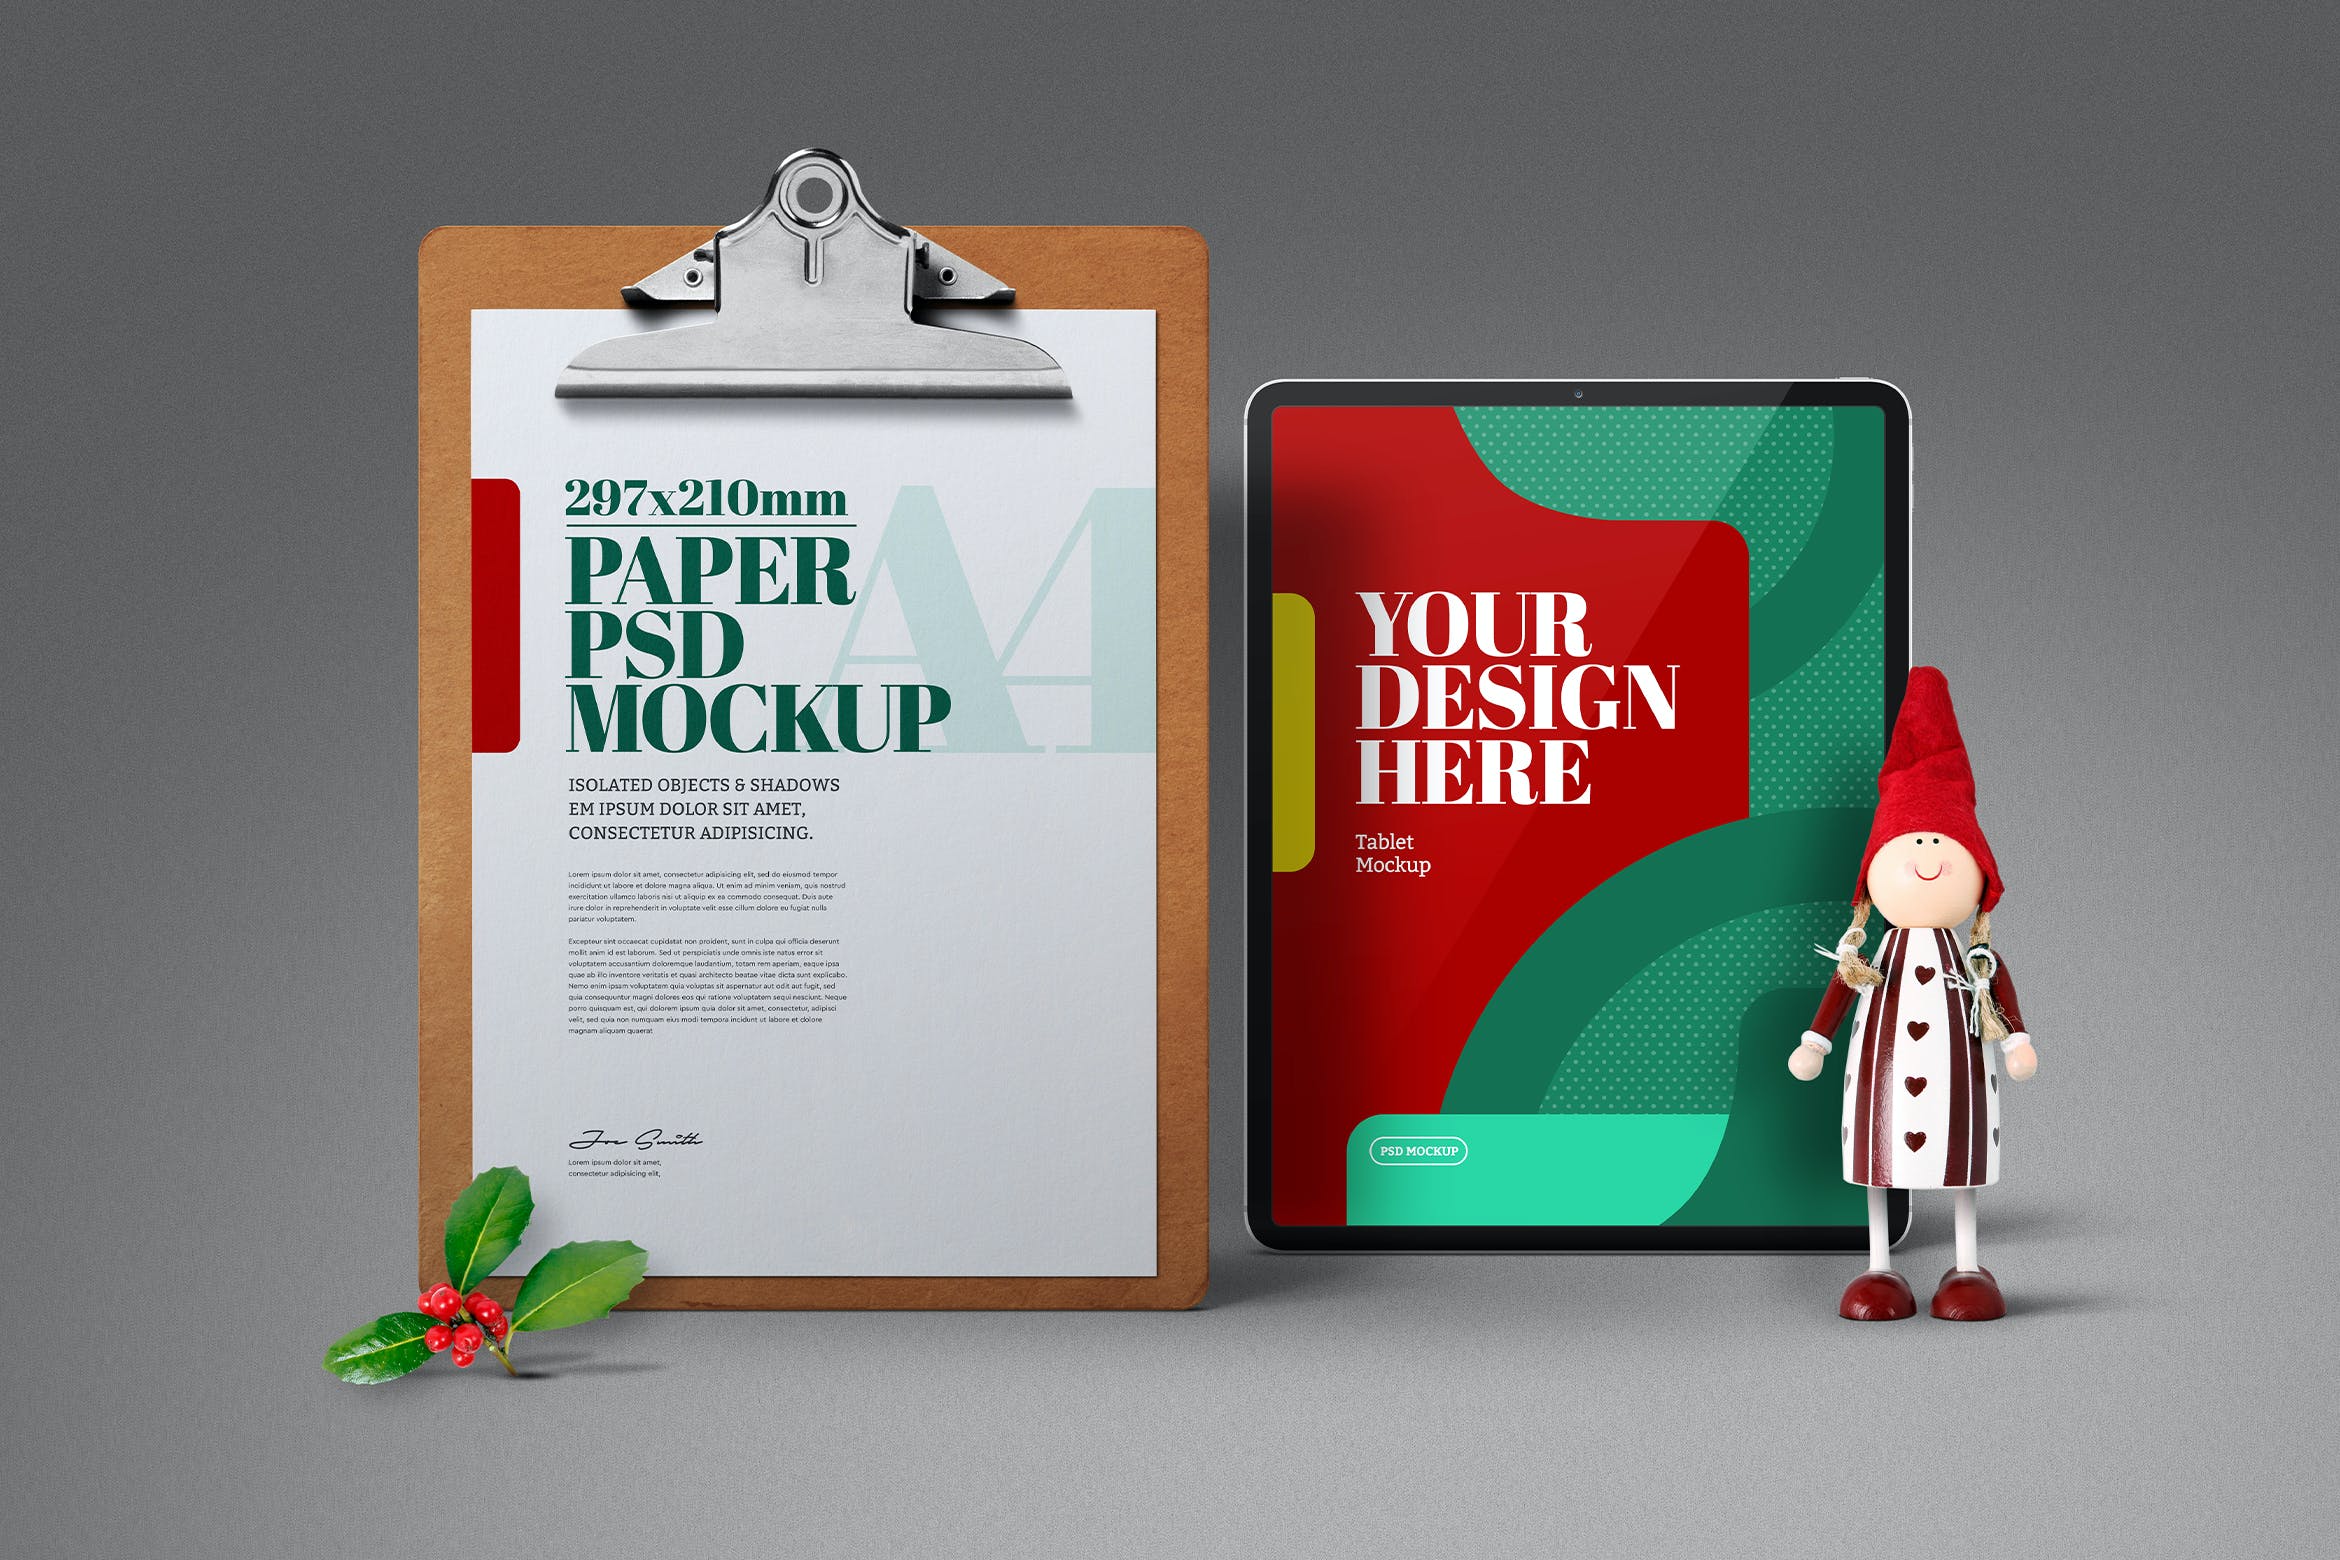 平板电脑样机&圣诞A4传单剪贴板 Christmas A4 Flyer Clipboard Tablet Mockup设计素材模板